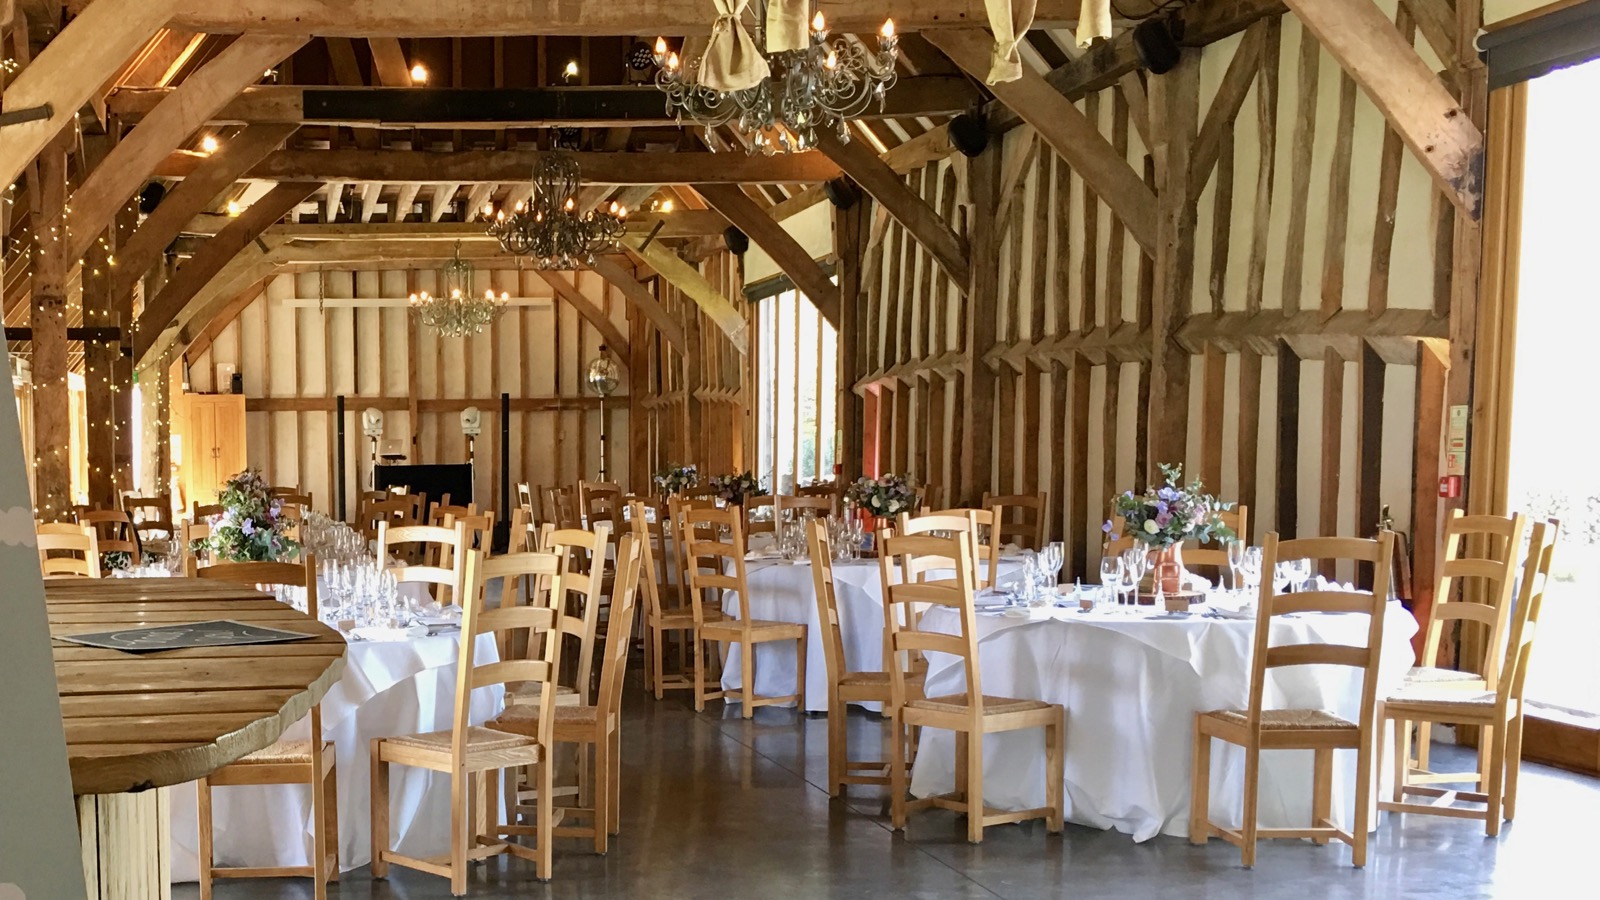 the threshing barn set up for a wedding